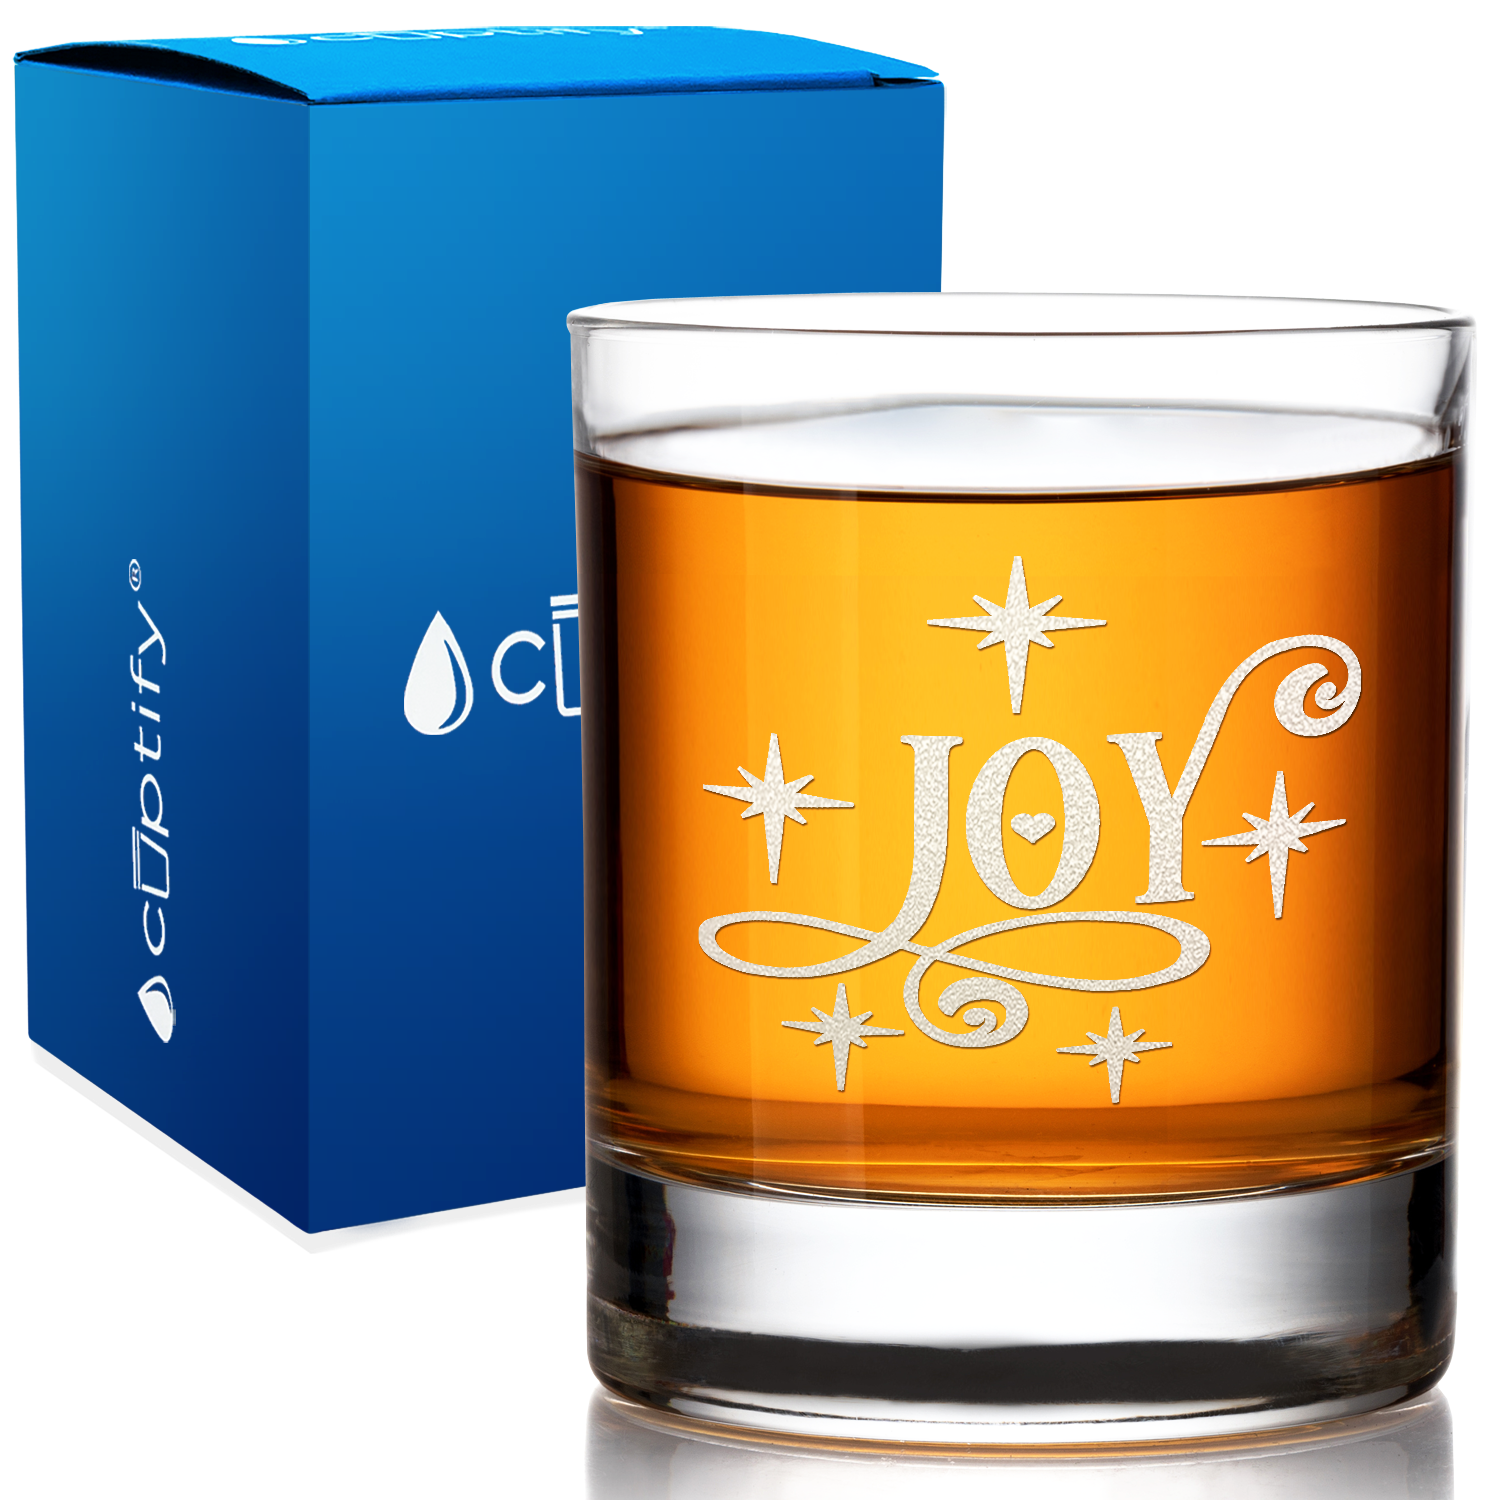 Joy on 10.25 oz Old Fashioned Glass